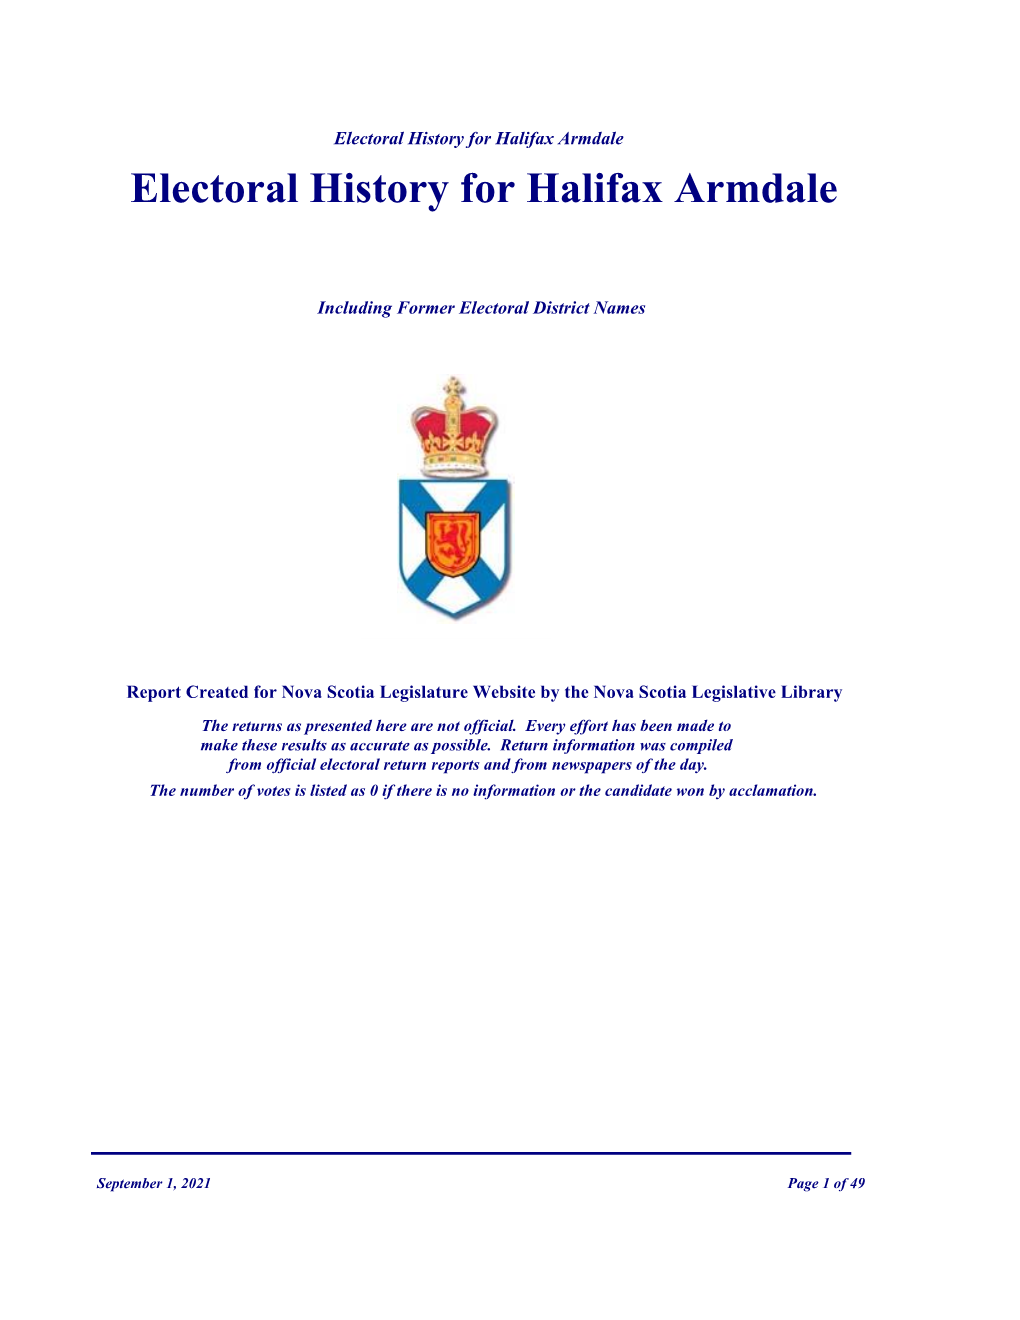 Halifax Armdale Electoral History for Halifax Armdale